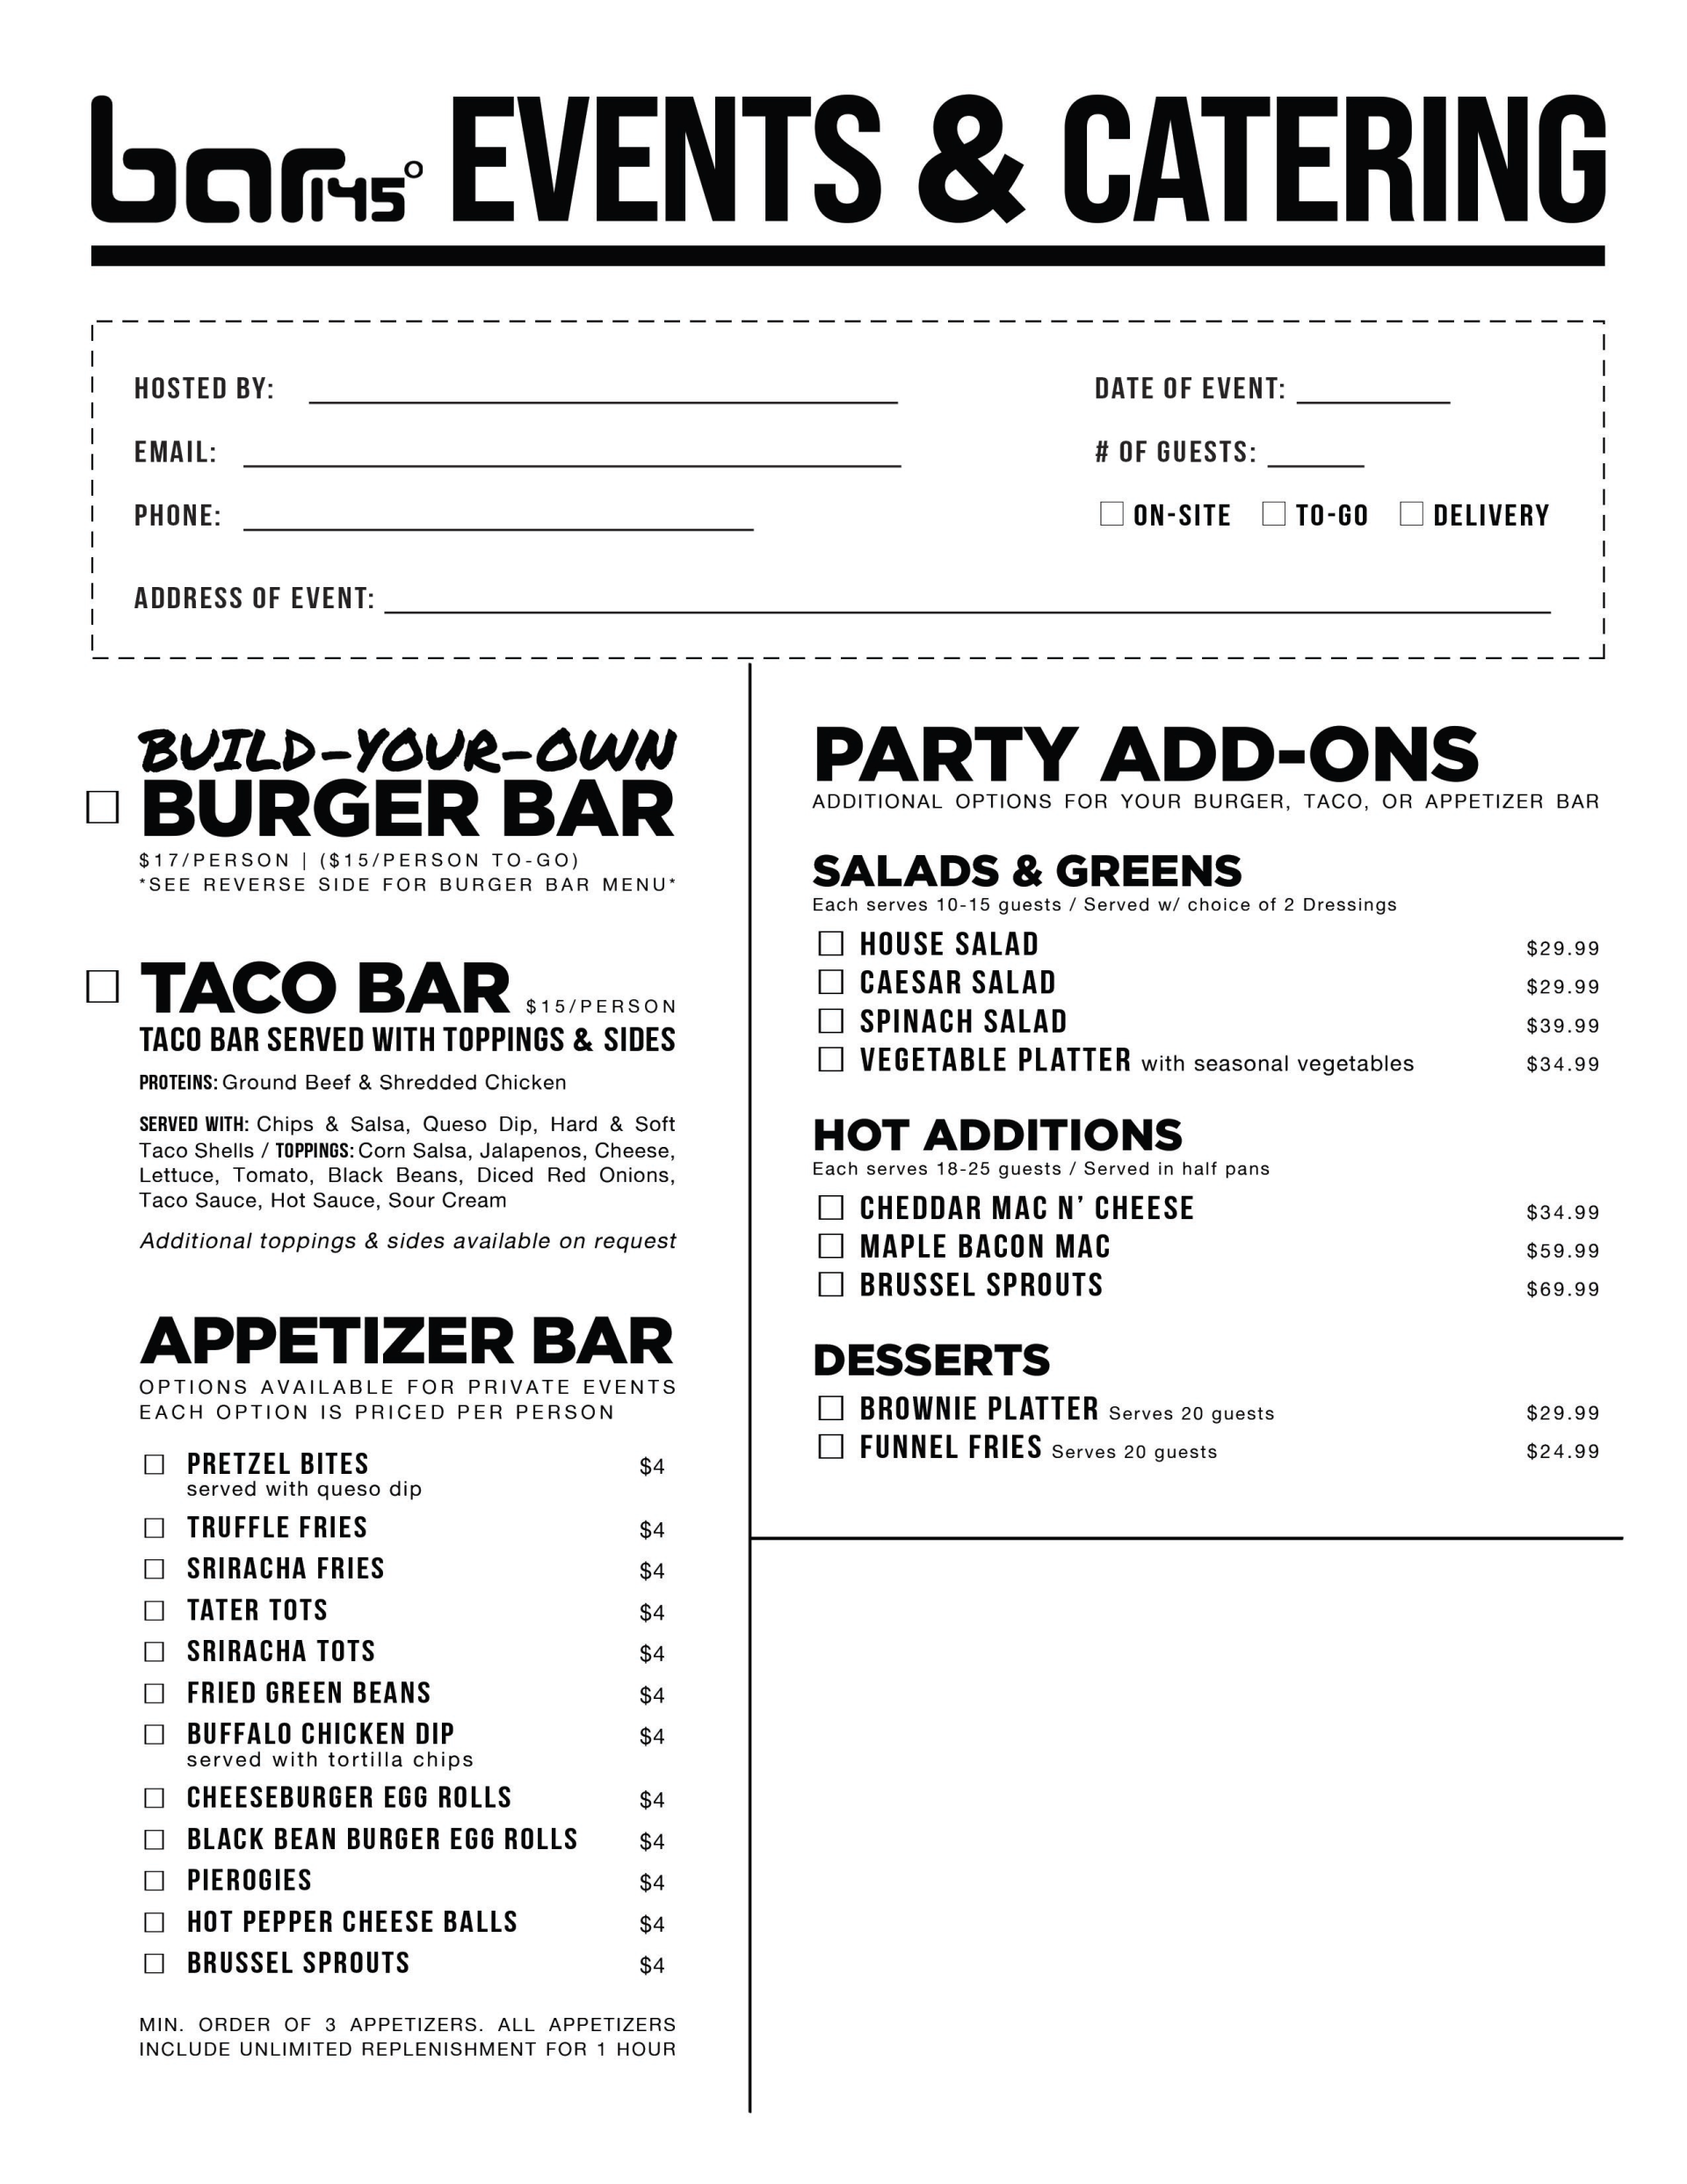 Reset Arcade / Bar 145 - Events and Catering - Toledo, Ohio